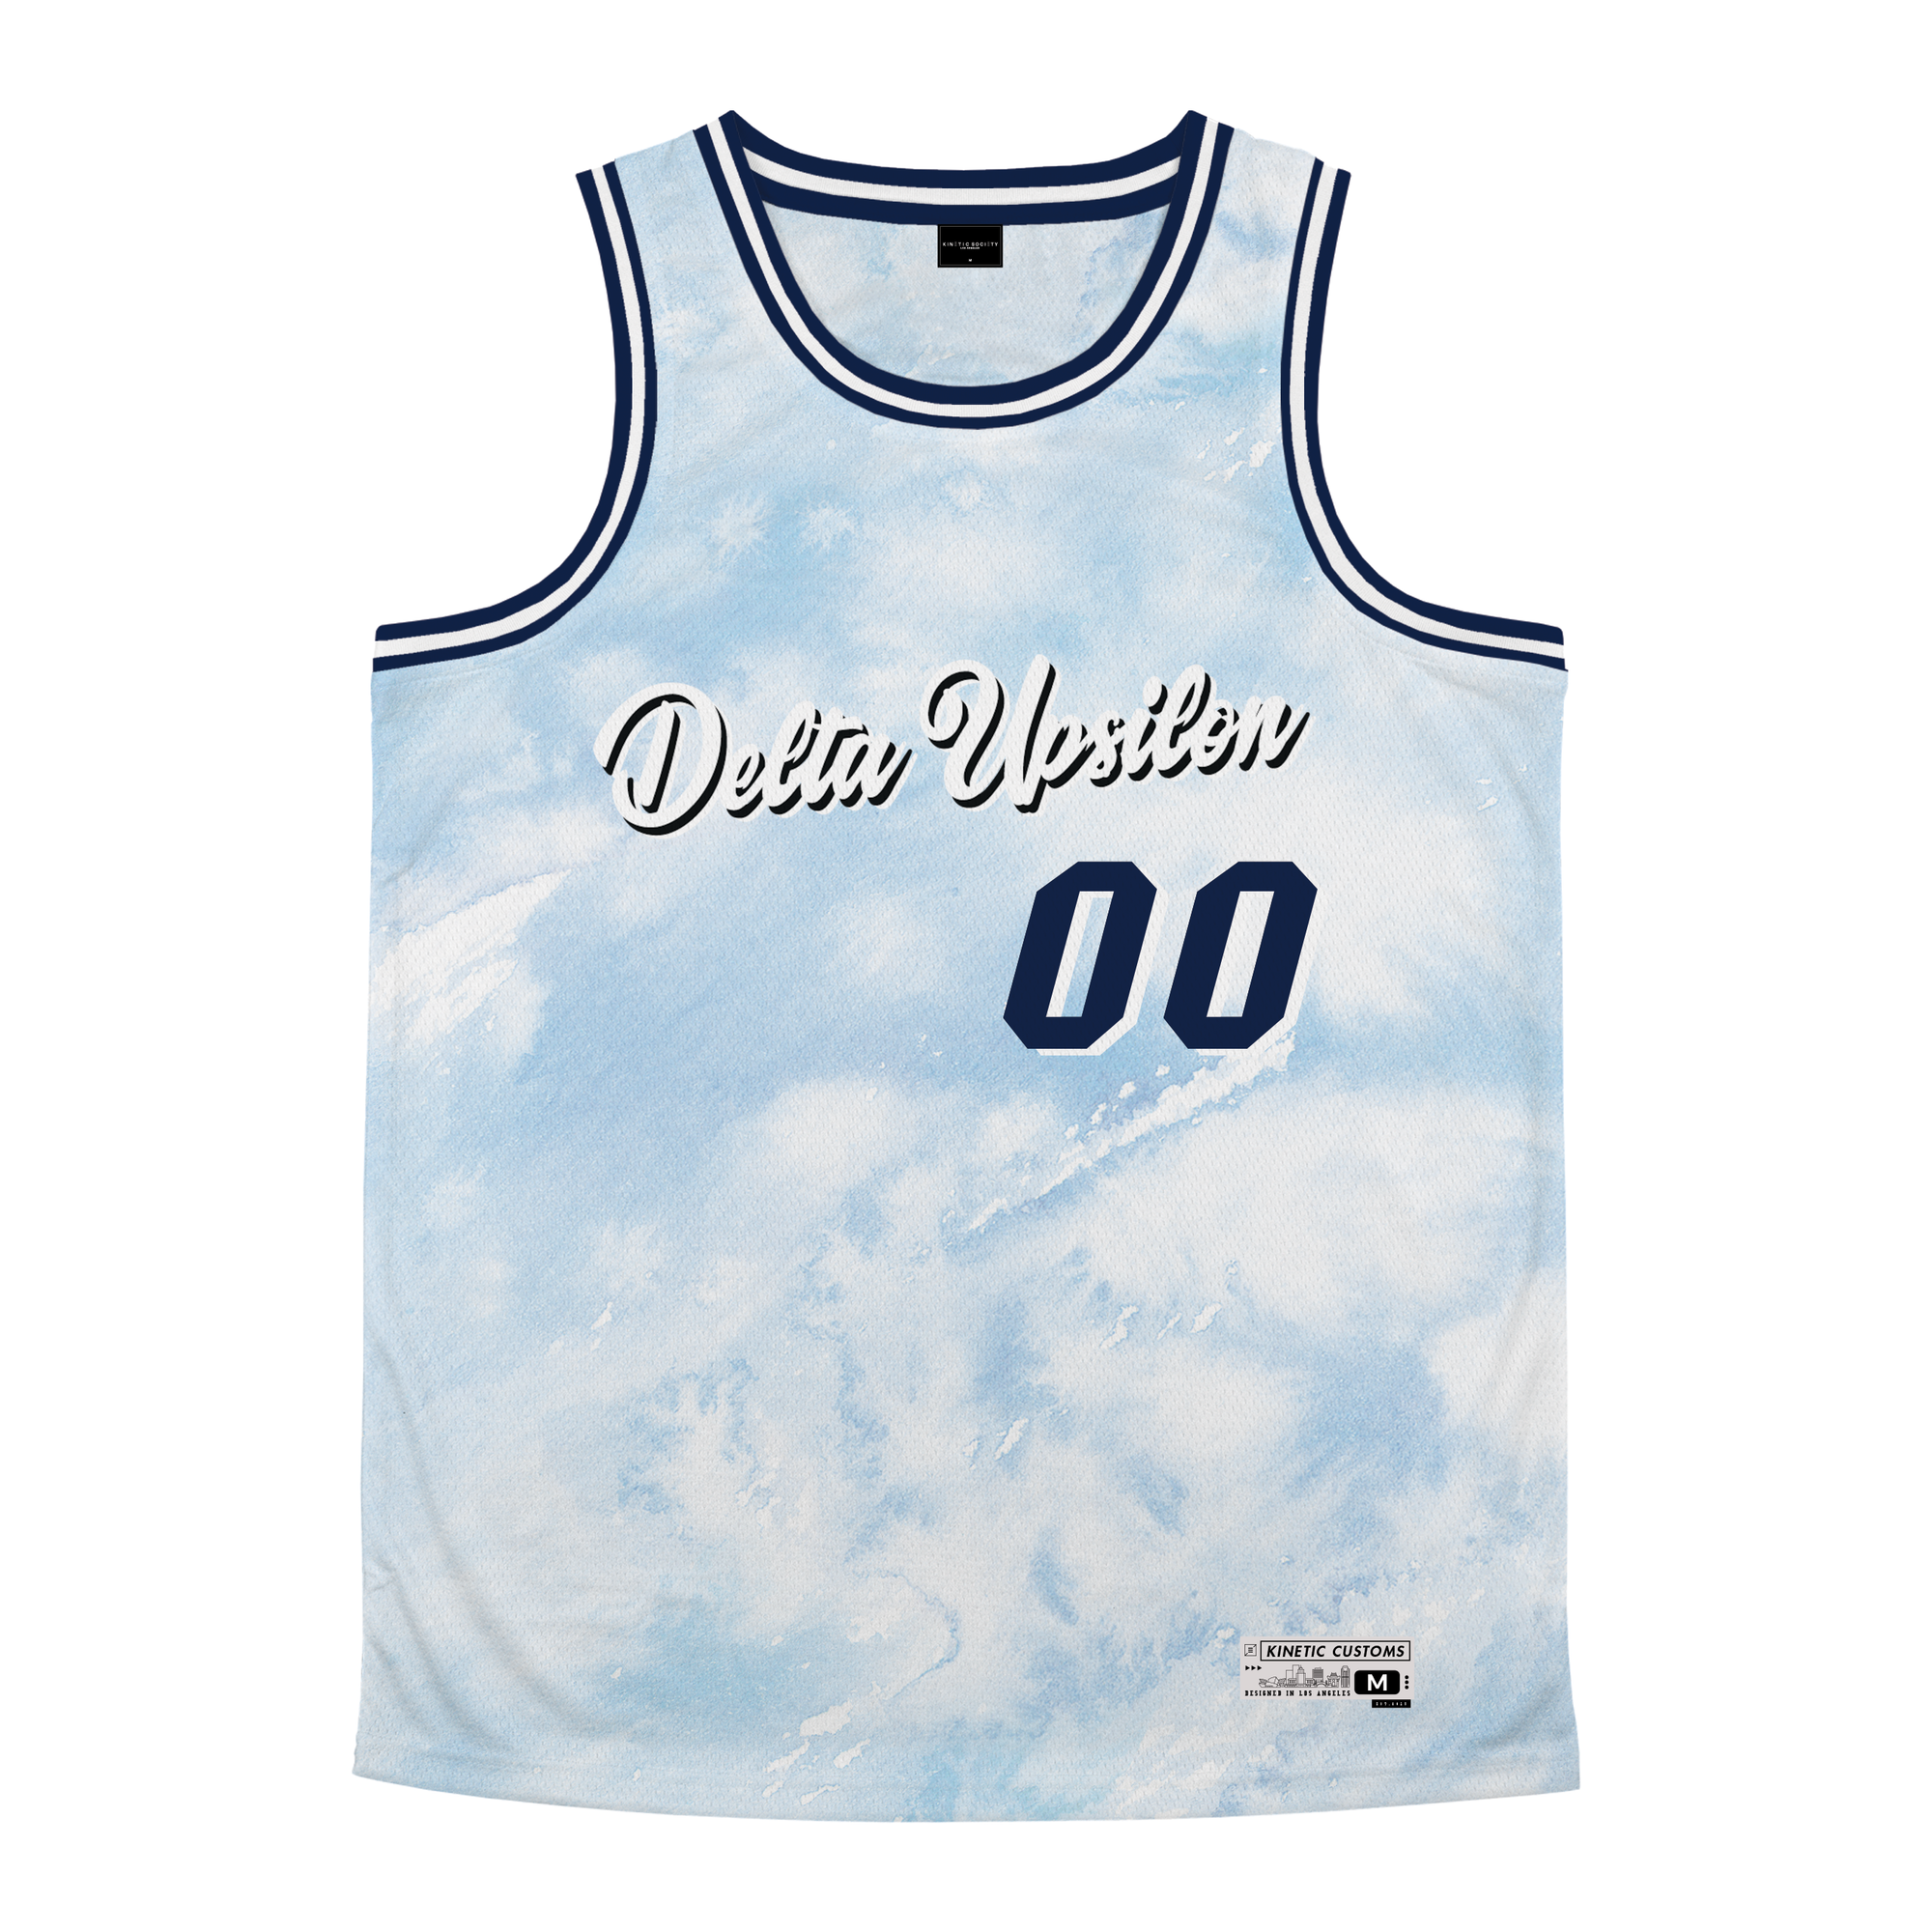 Delta Upsilon - Blue Sky Basketball Jersey